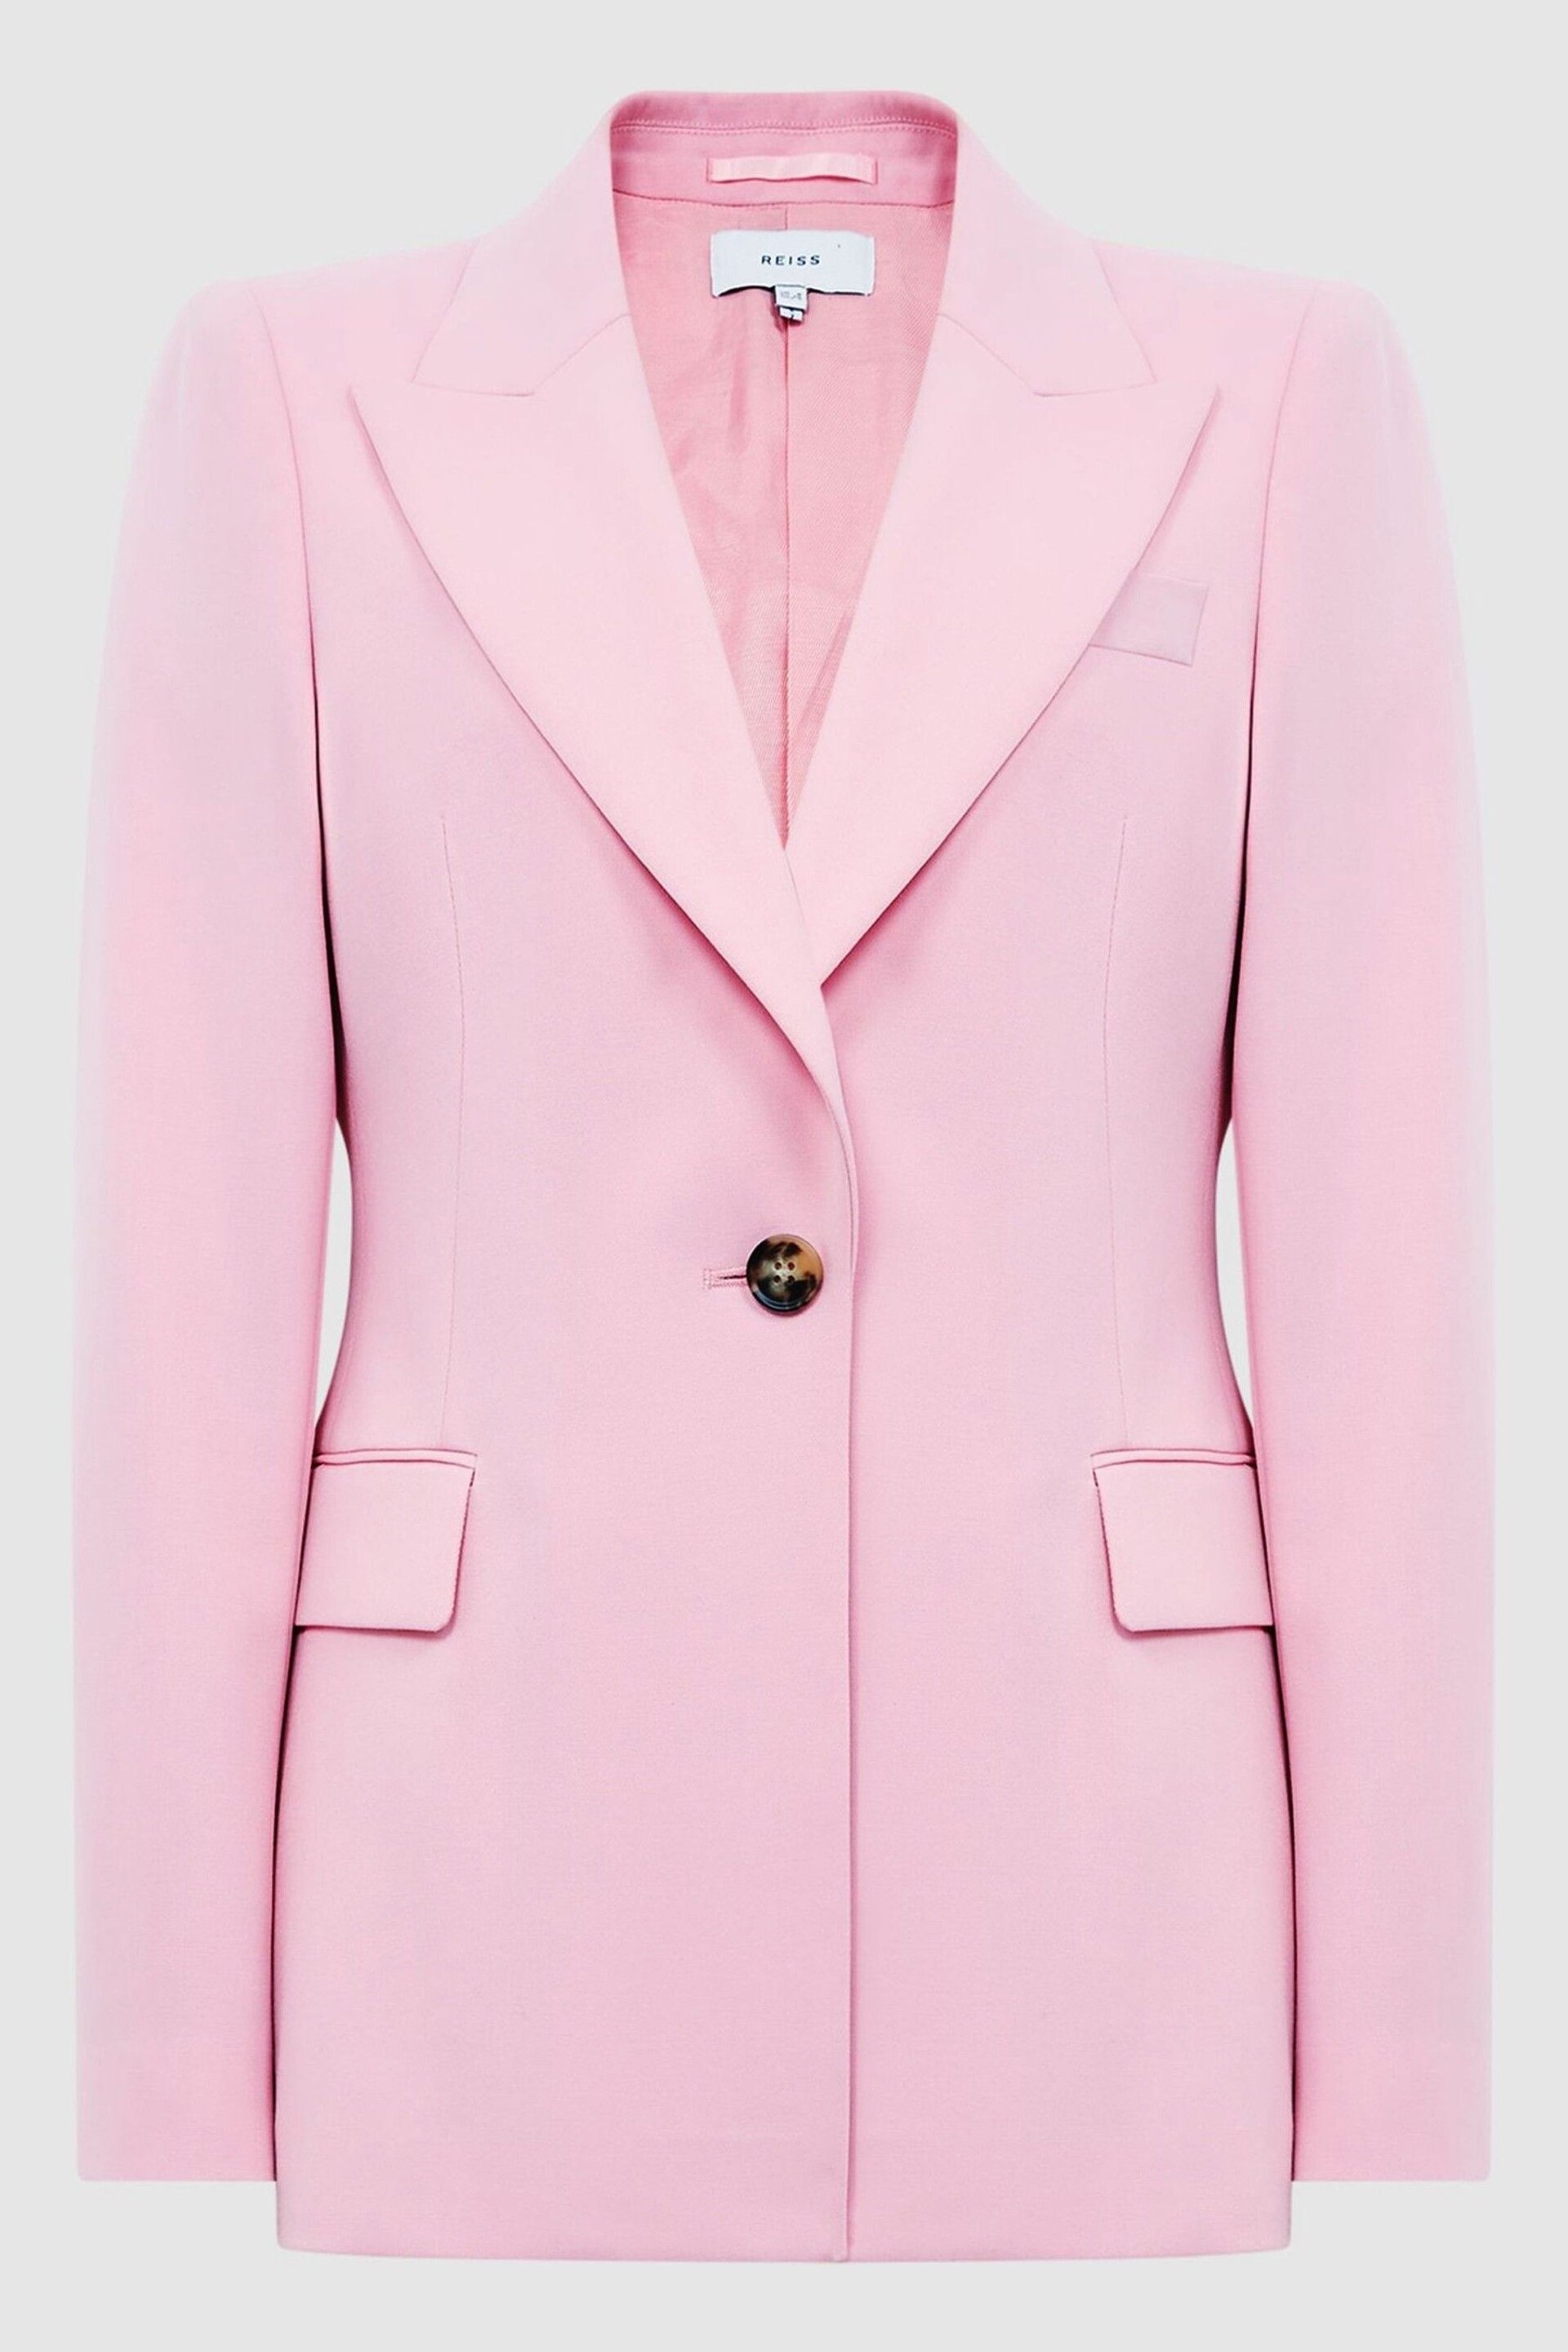 Reiss Pink Blair Single Breasted Wool Blend Blazer - Image 2 of 7